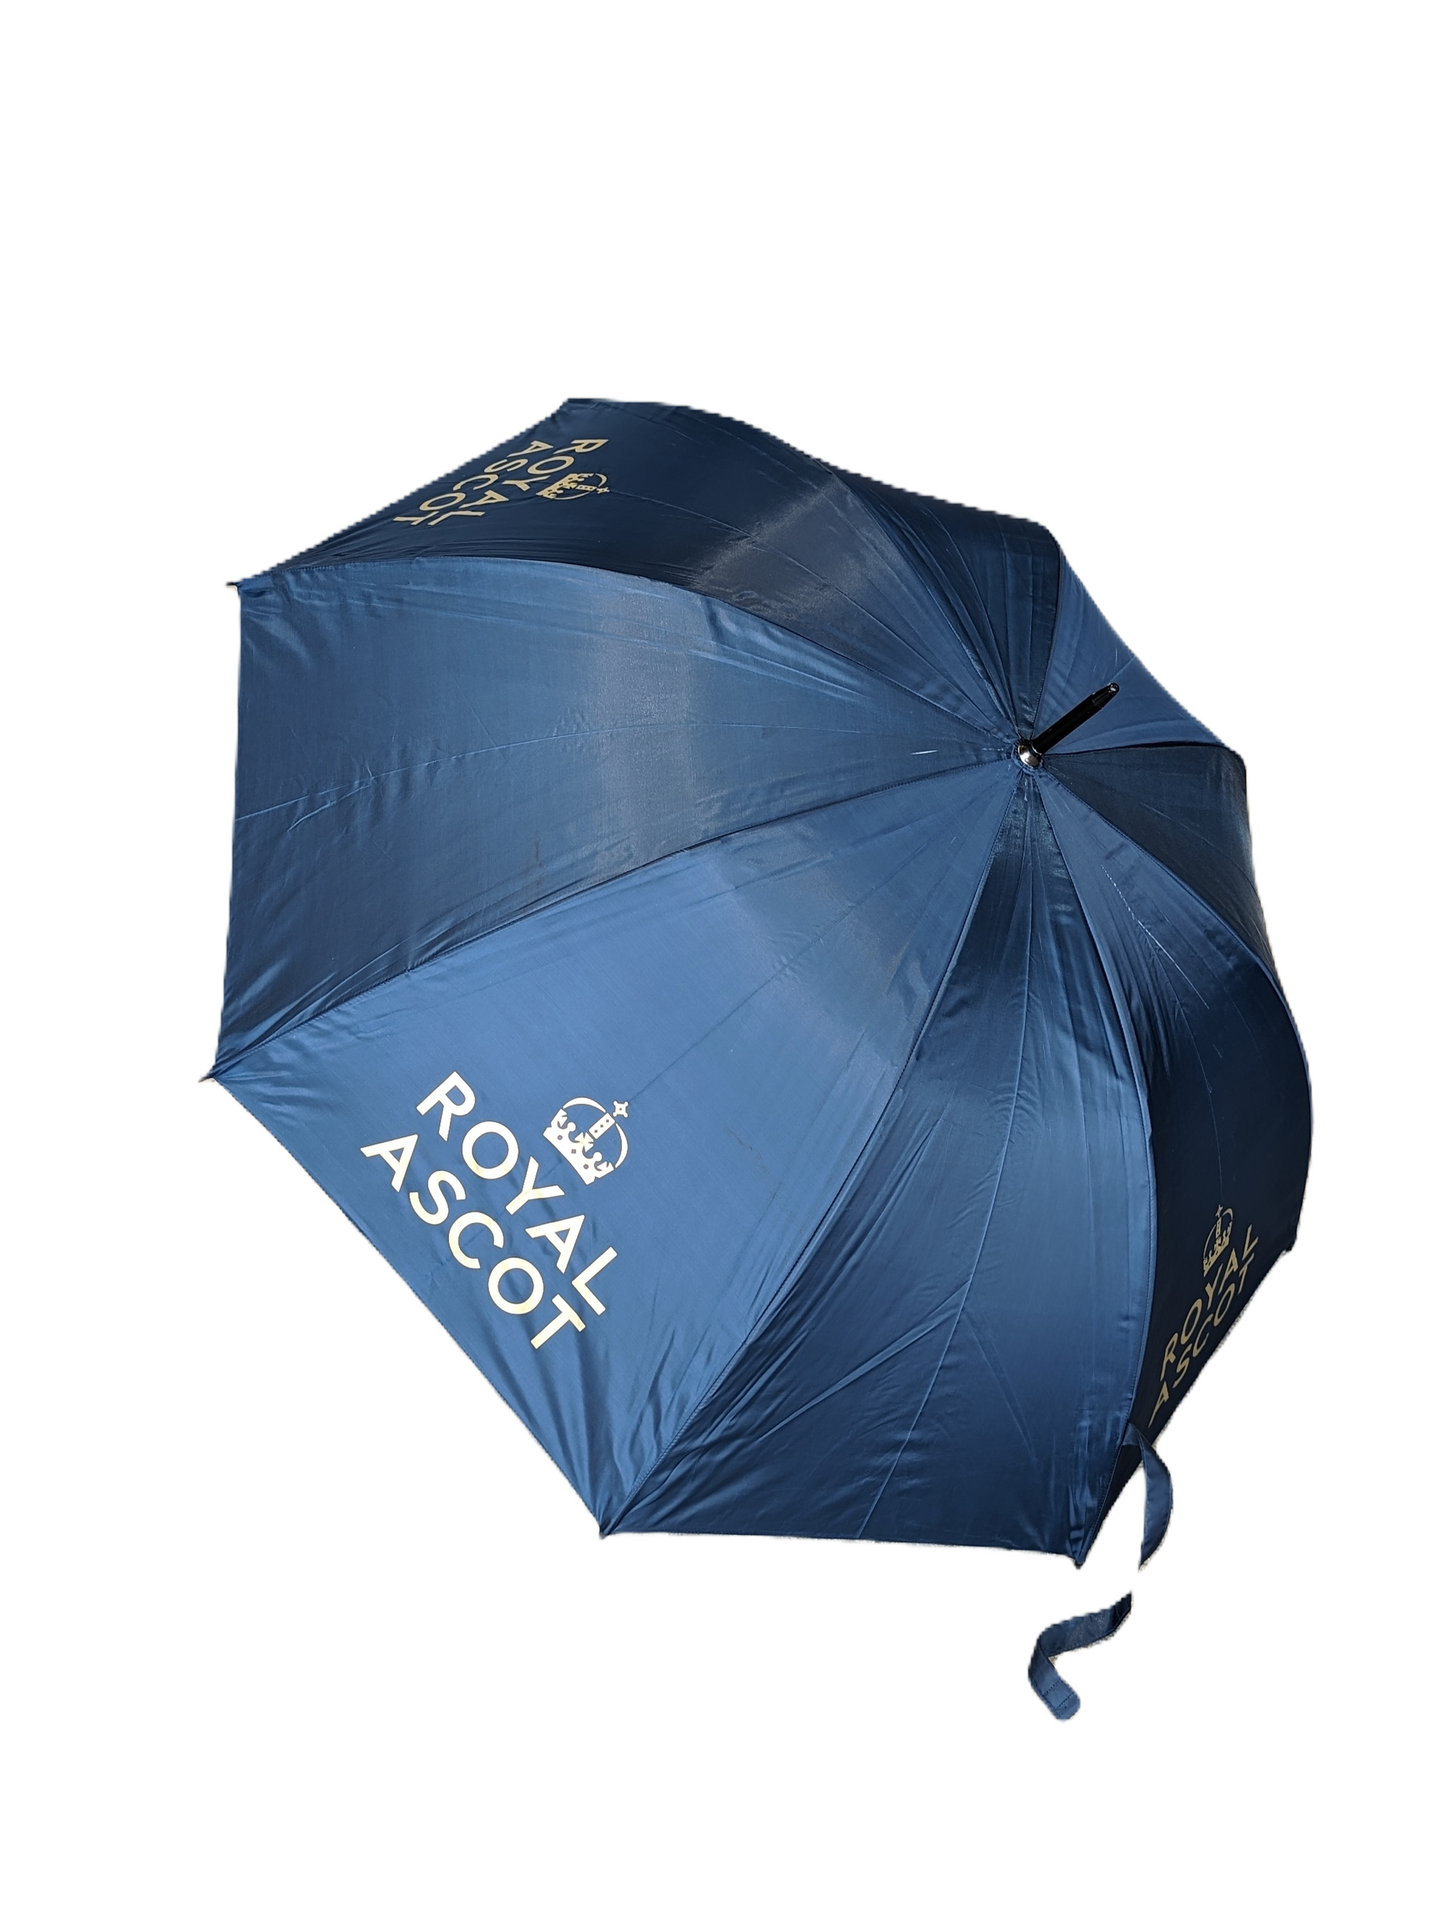 Royal Ascot Golf Umbrella - Navy